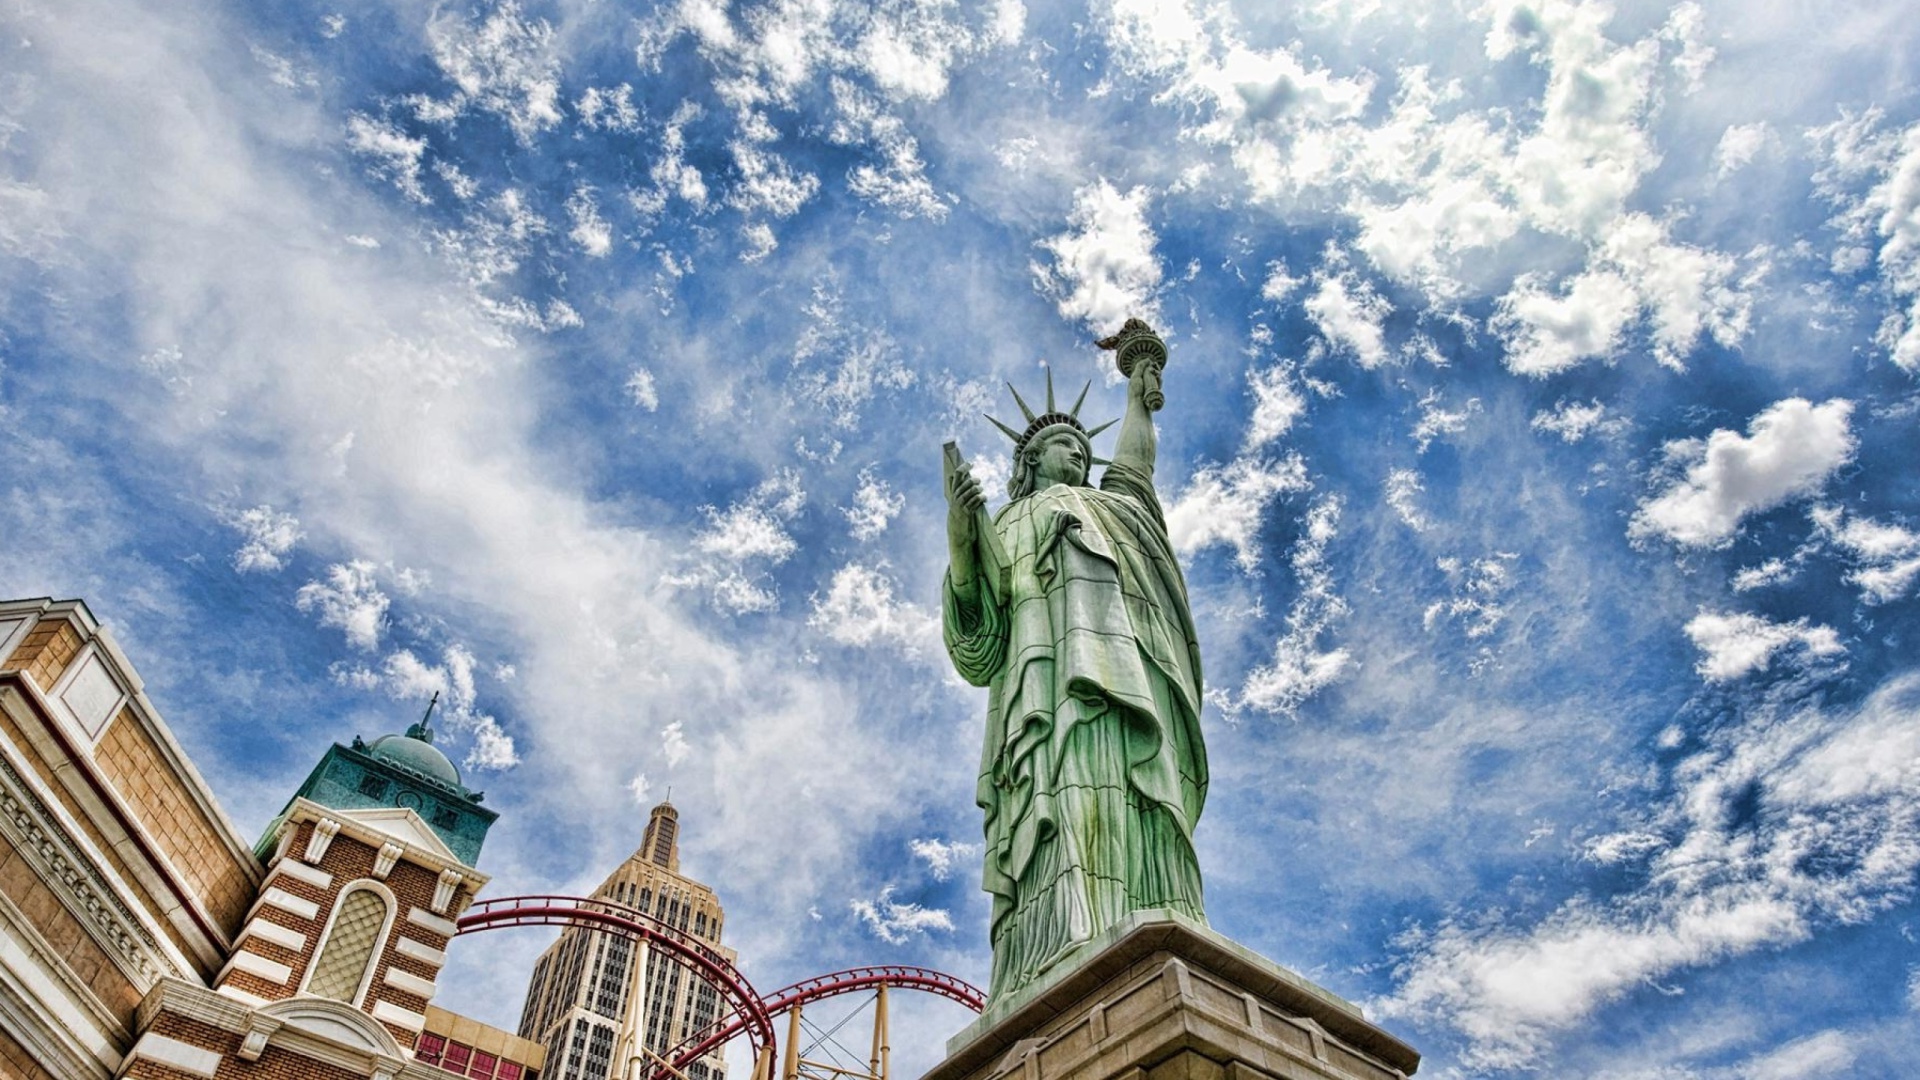 Обои Statue of Liberty in Vegas 1920x1080